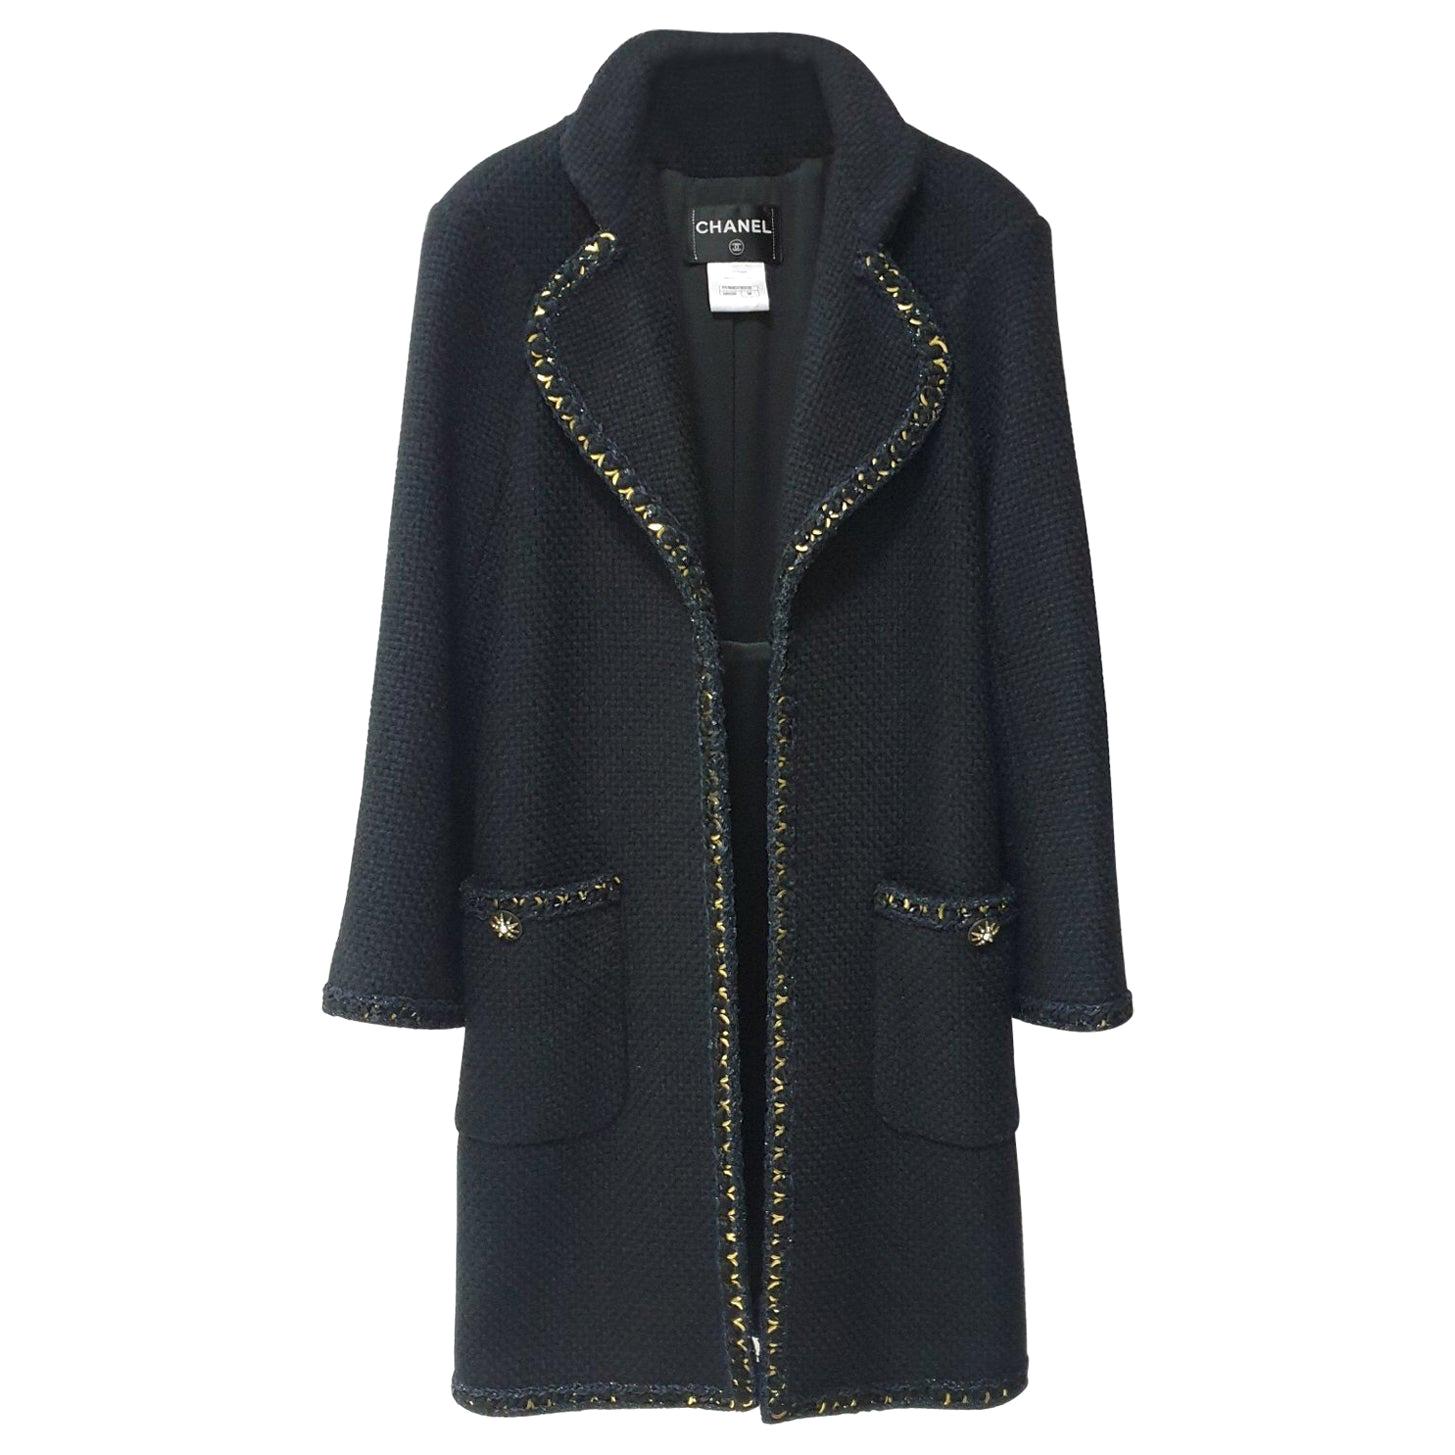 Chanel Paris Salzburg Runway Gripoix Buttons  Black Coat Jacket 